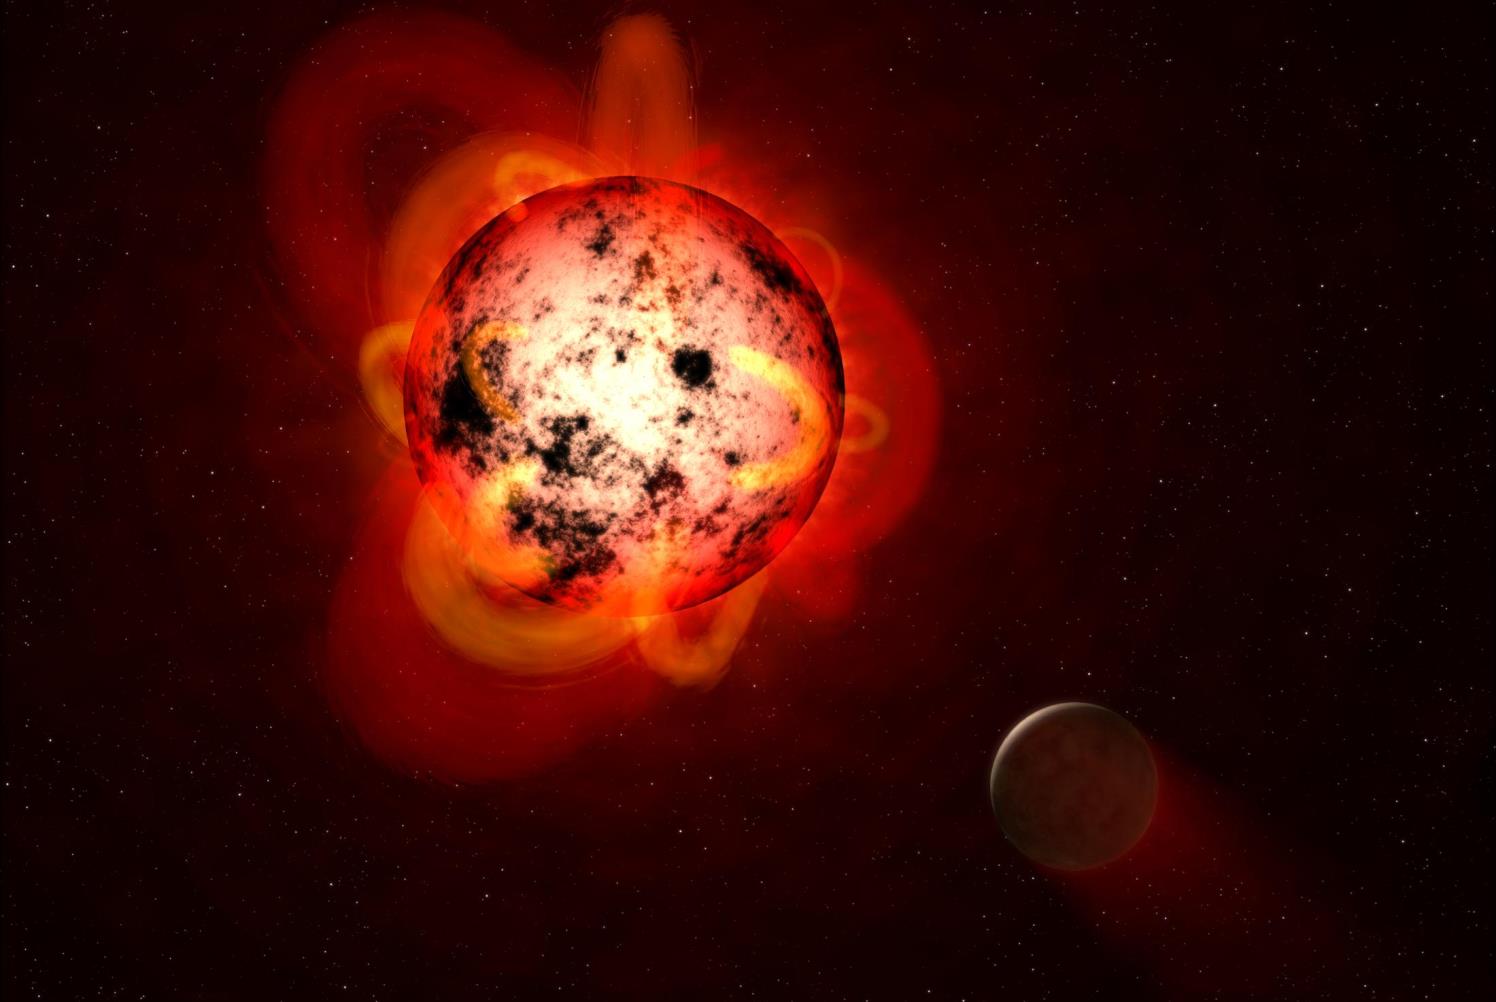 Crveni patuljak lišava planet njegove atmosfere. Izvor: NASA/ESA/STScI/G. Bacon.